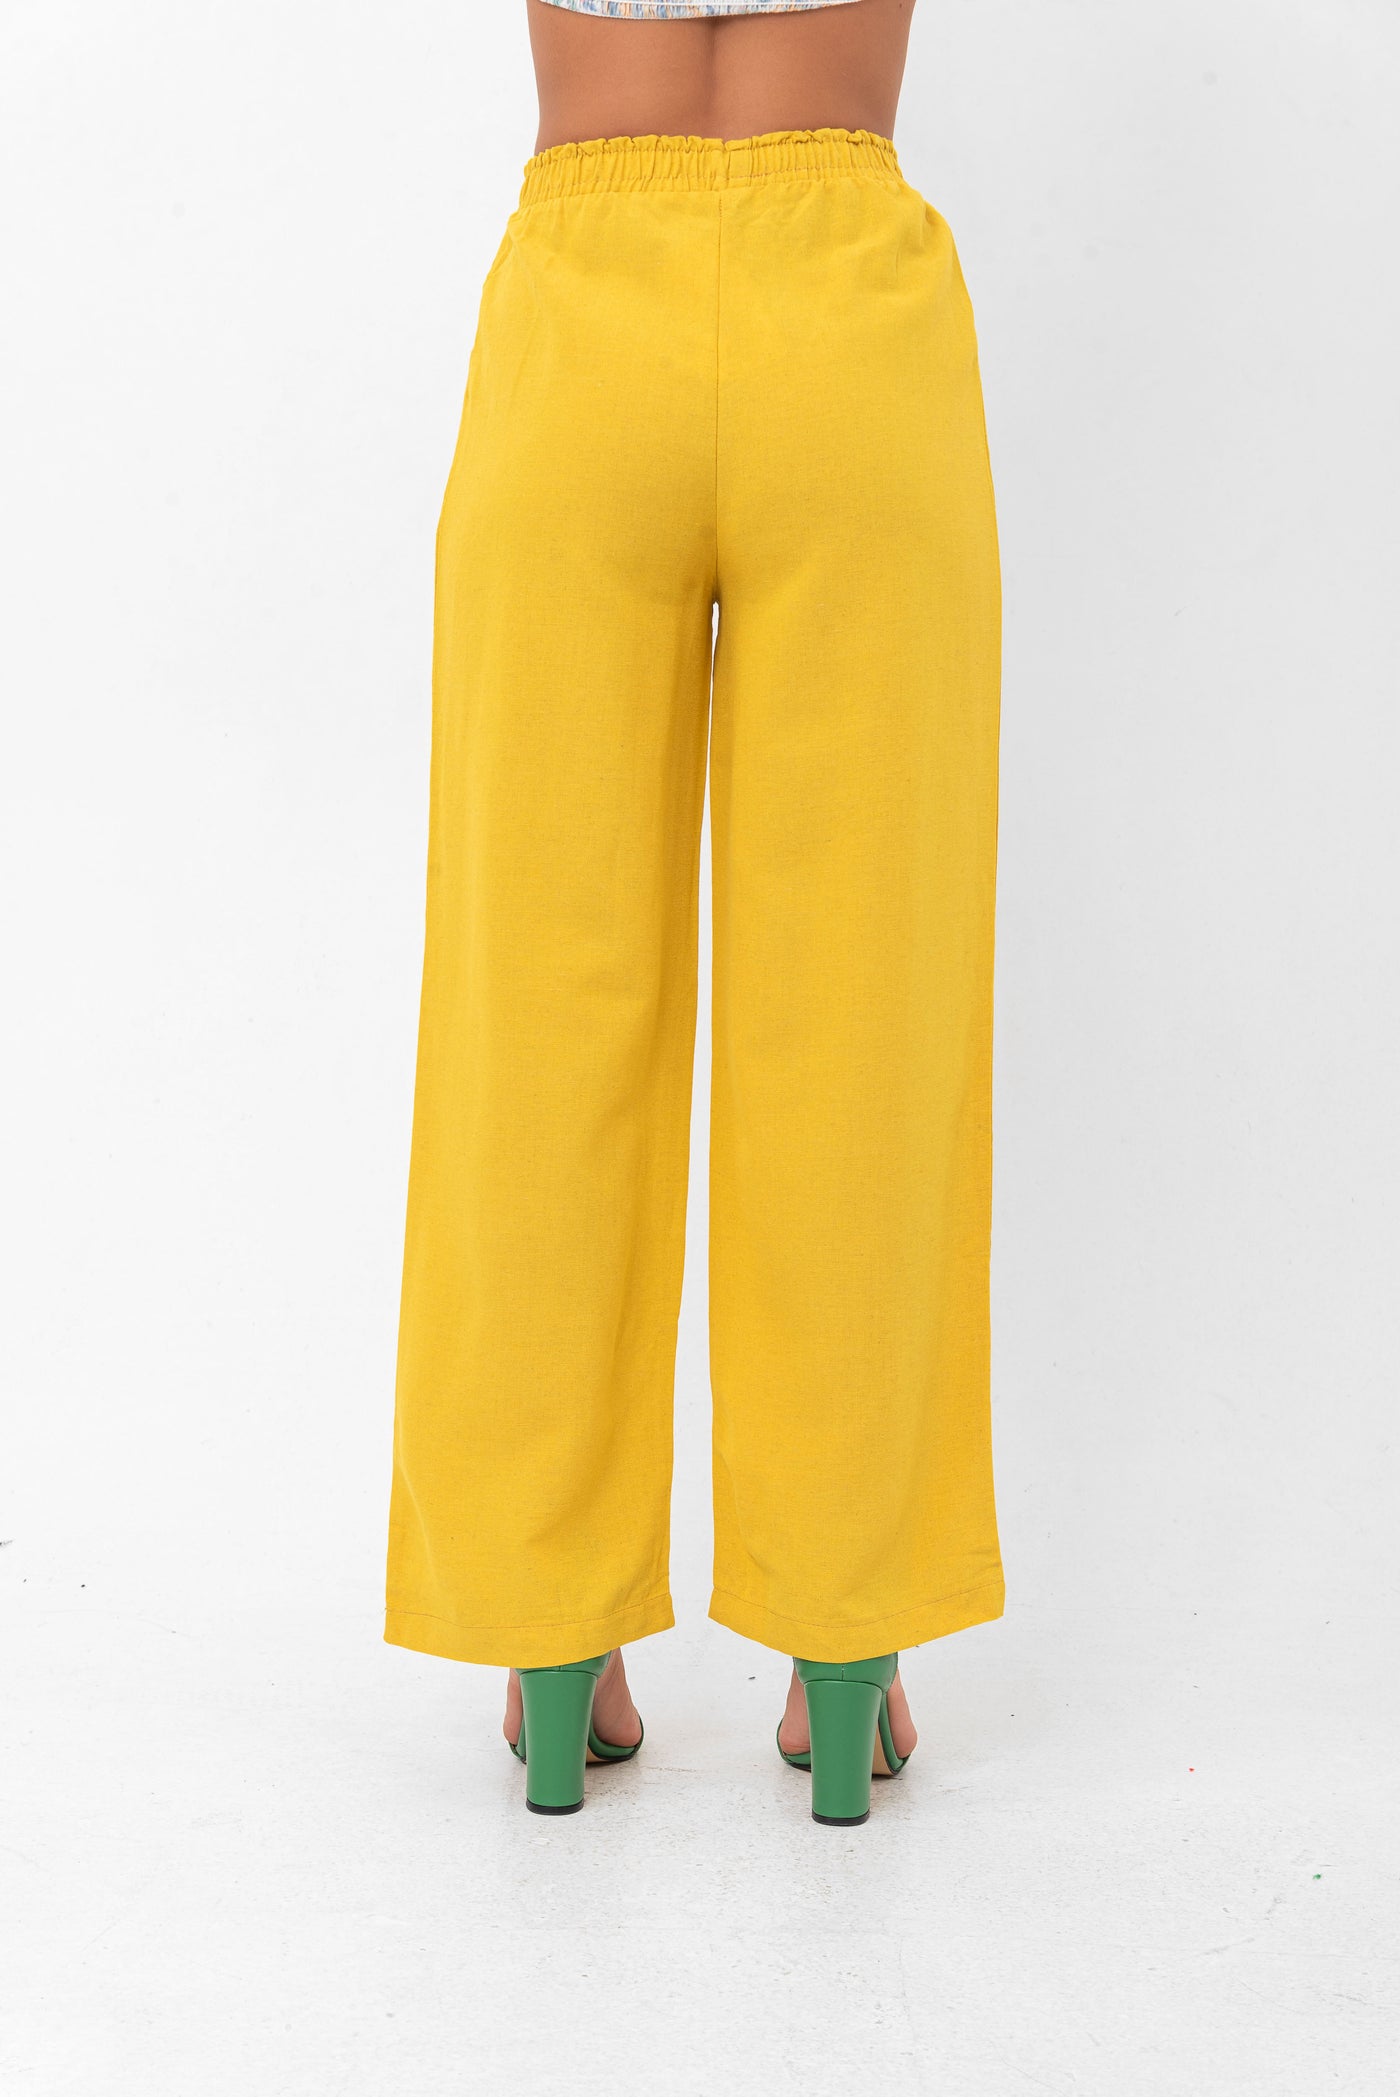 Roxy Casual Lounge Pants - Yellow